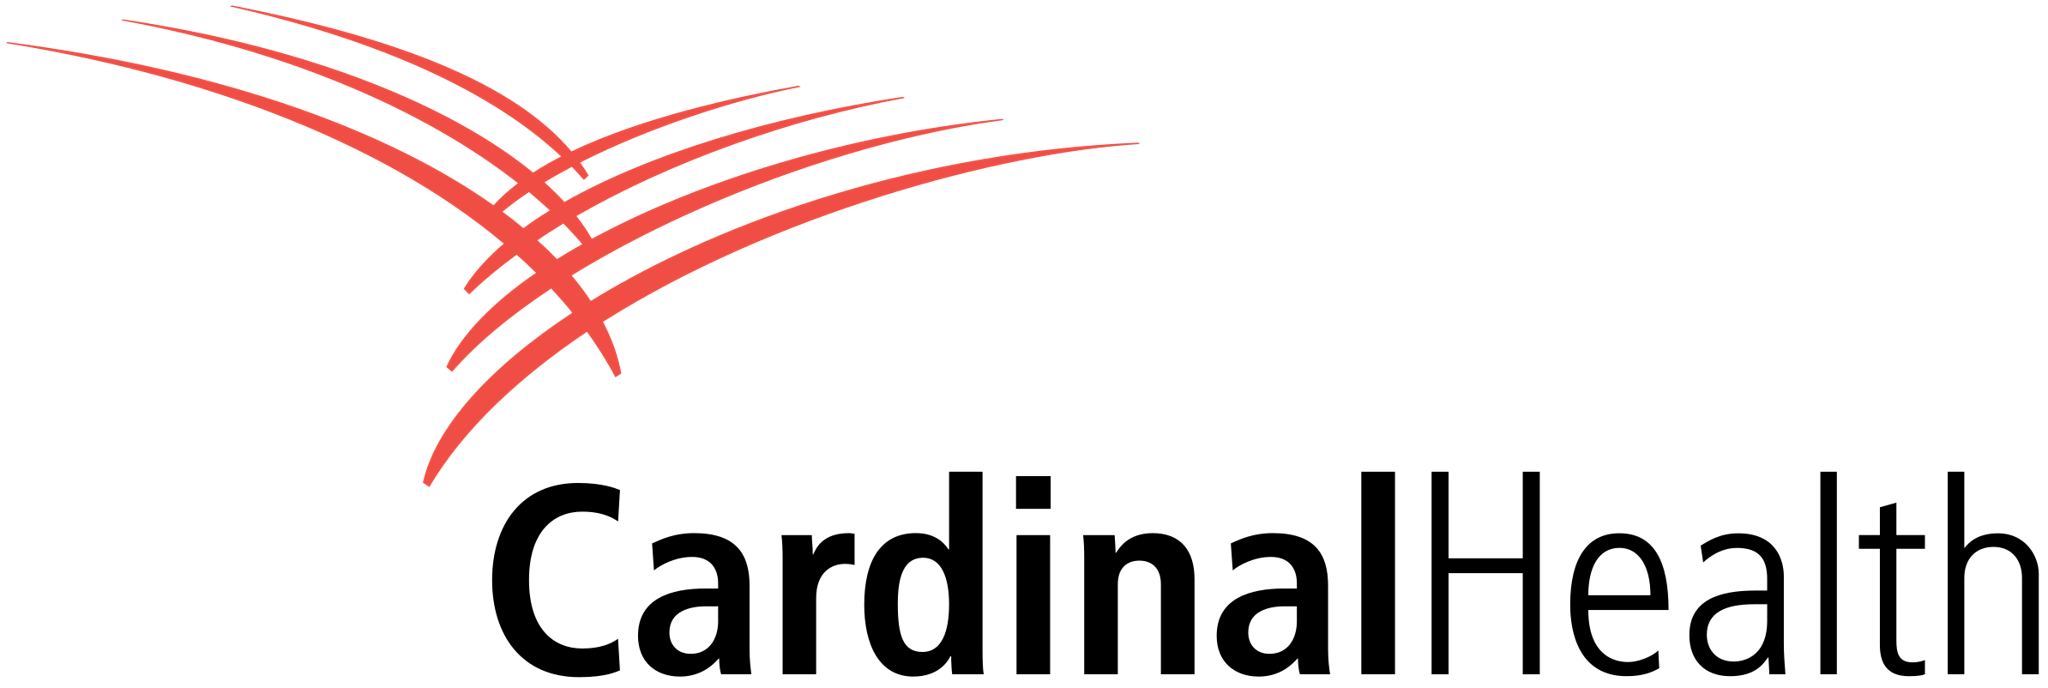 Cardinal health logo.svg